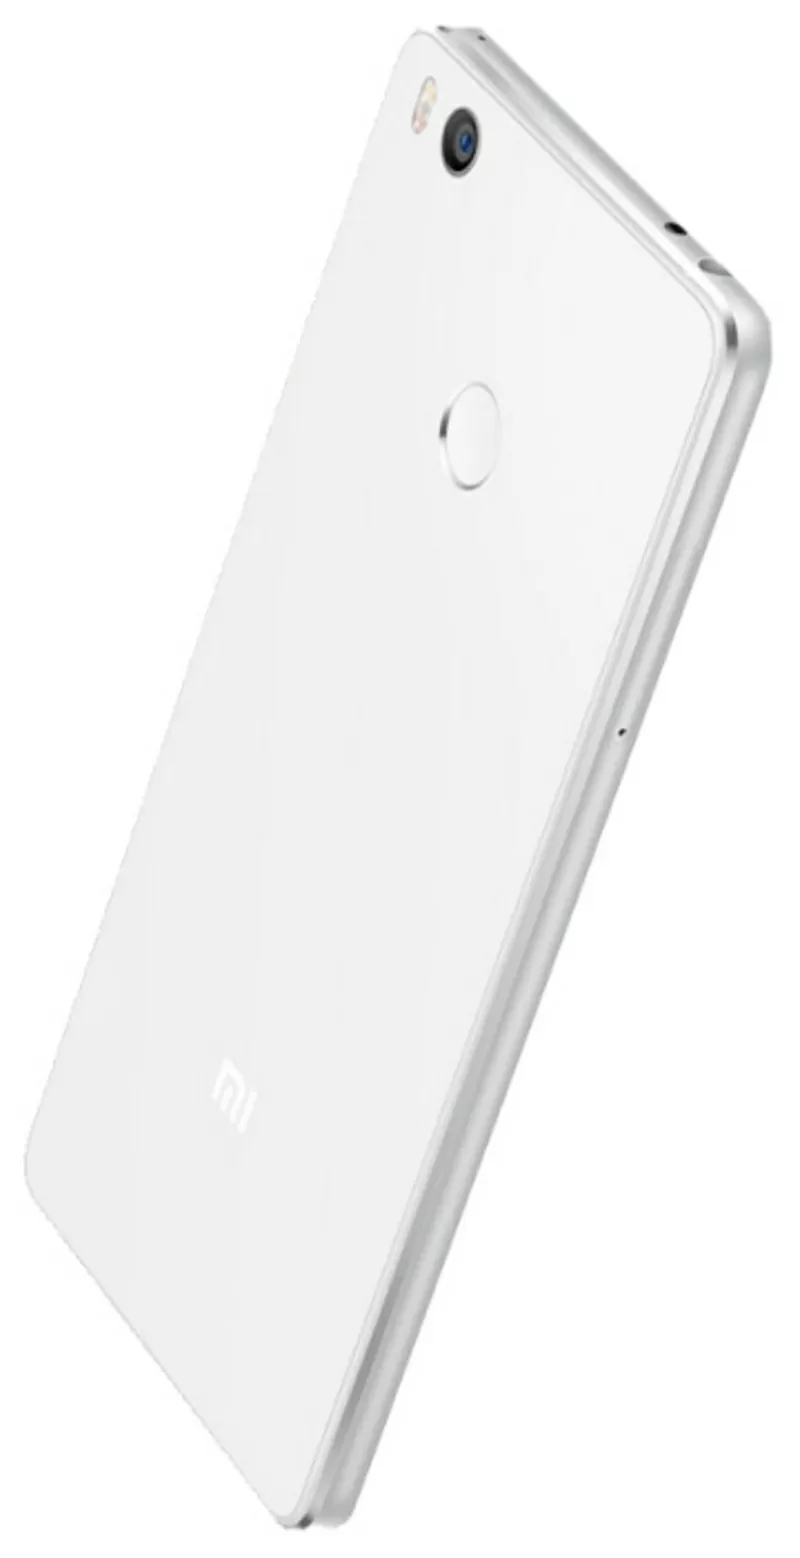 Xiaomi MI 4s 64GB (3GD Ram) Gold,  White. 5